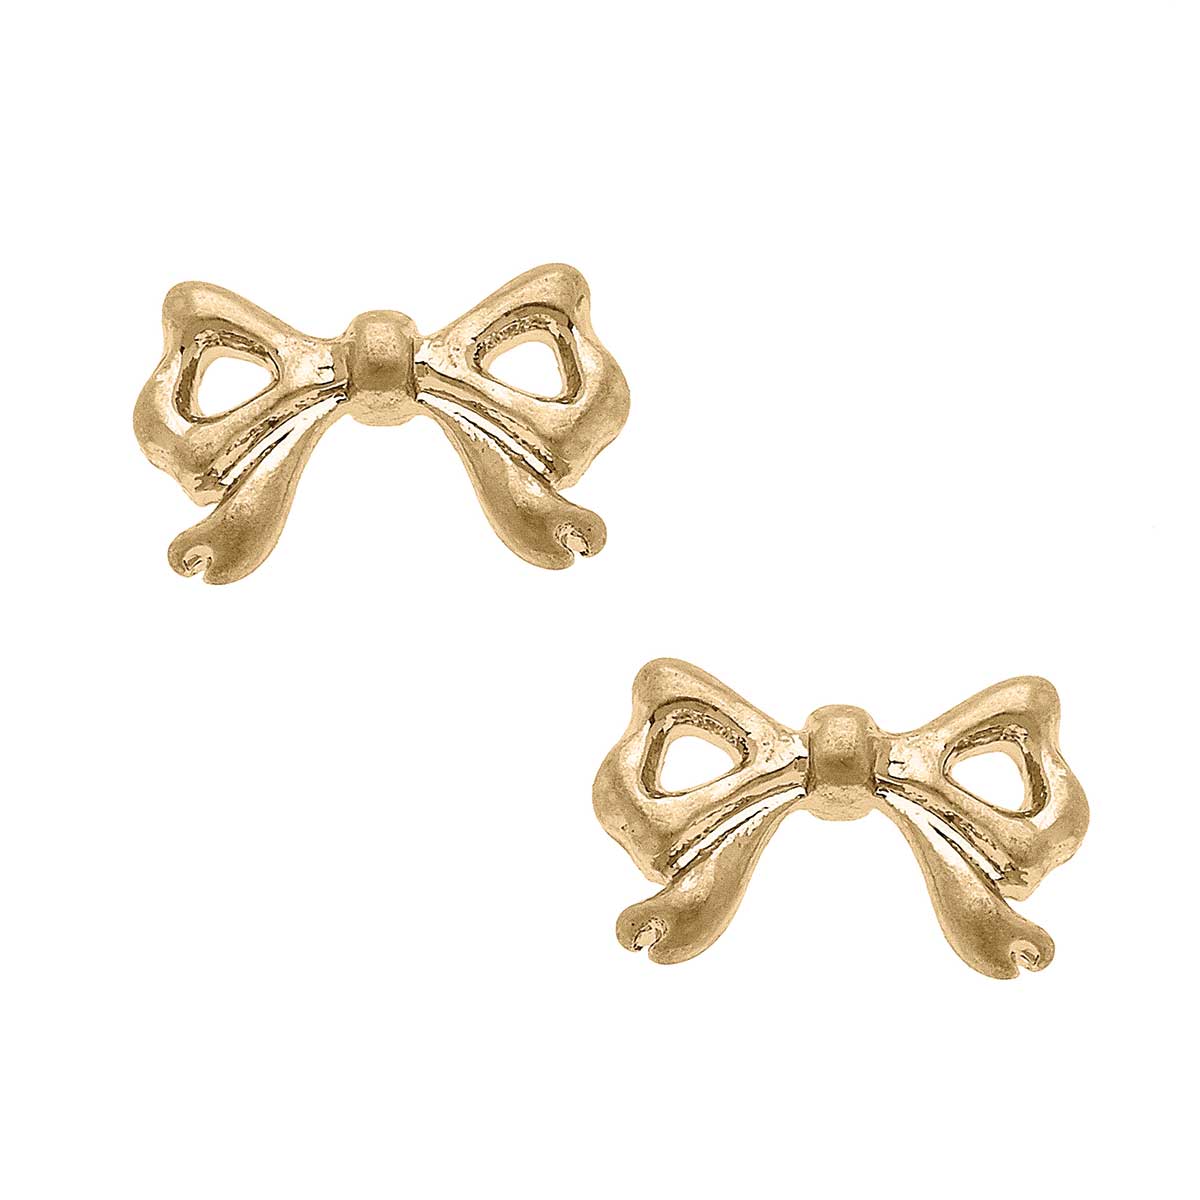 Callie Bow Stud Earrings - Worn Gold